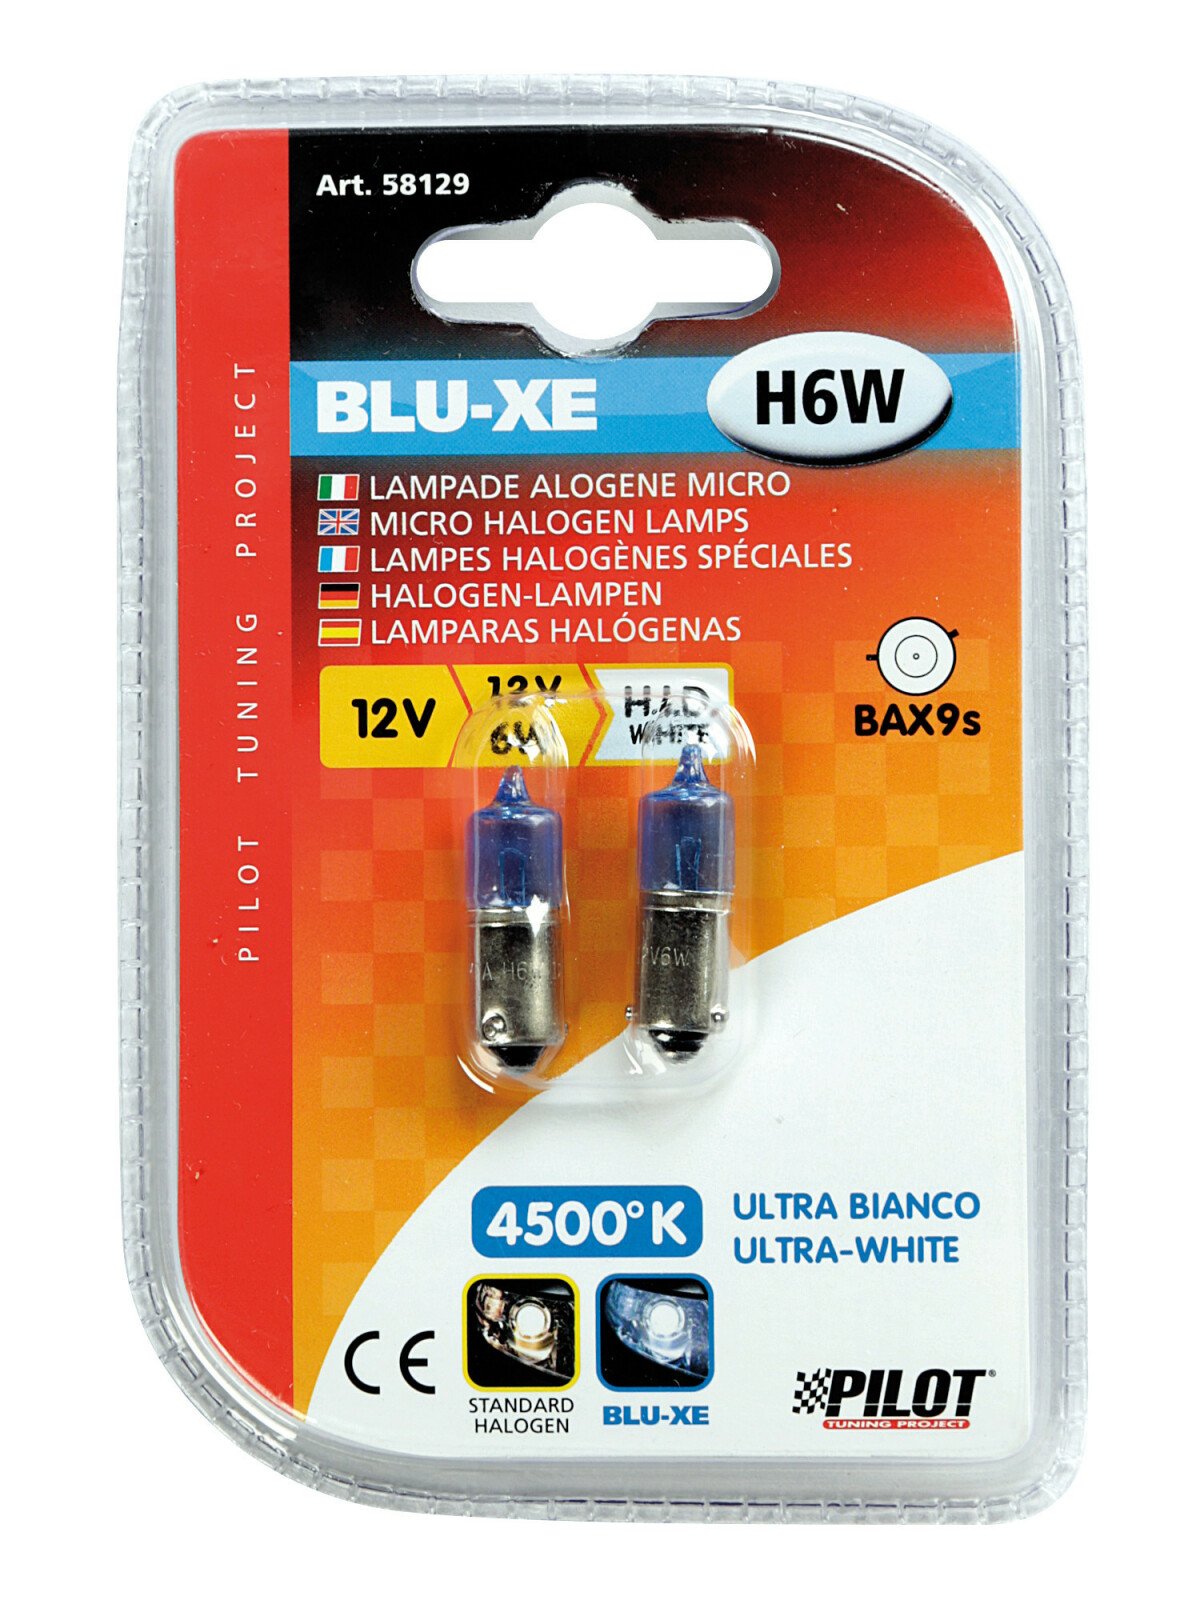 12V Blu-Xe Halogen micro lamp H6W 2pcs - Blue thumb